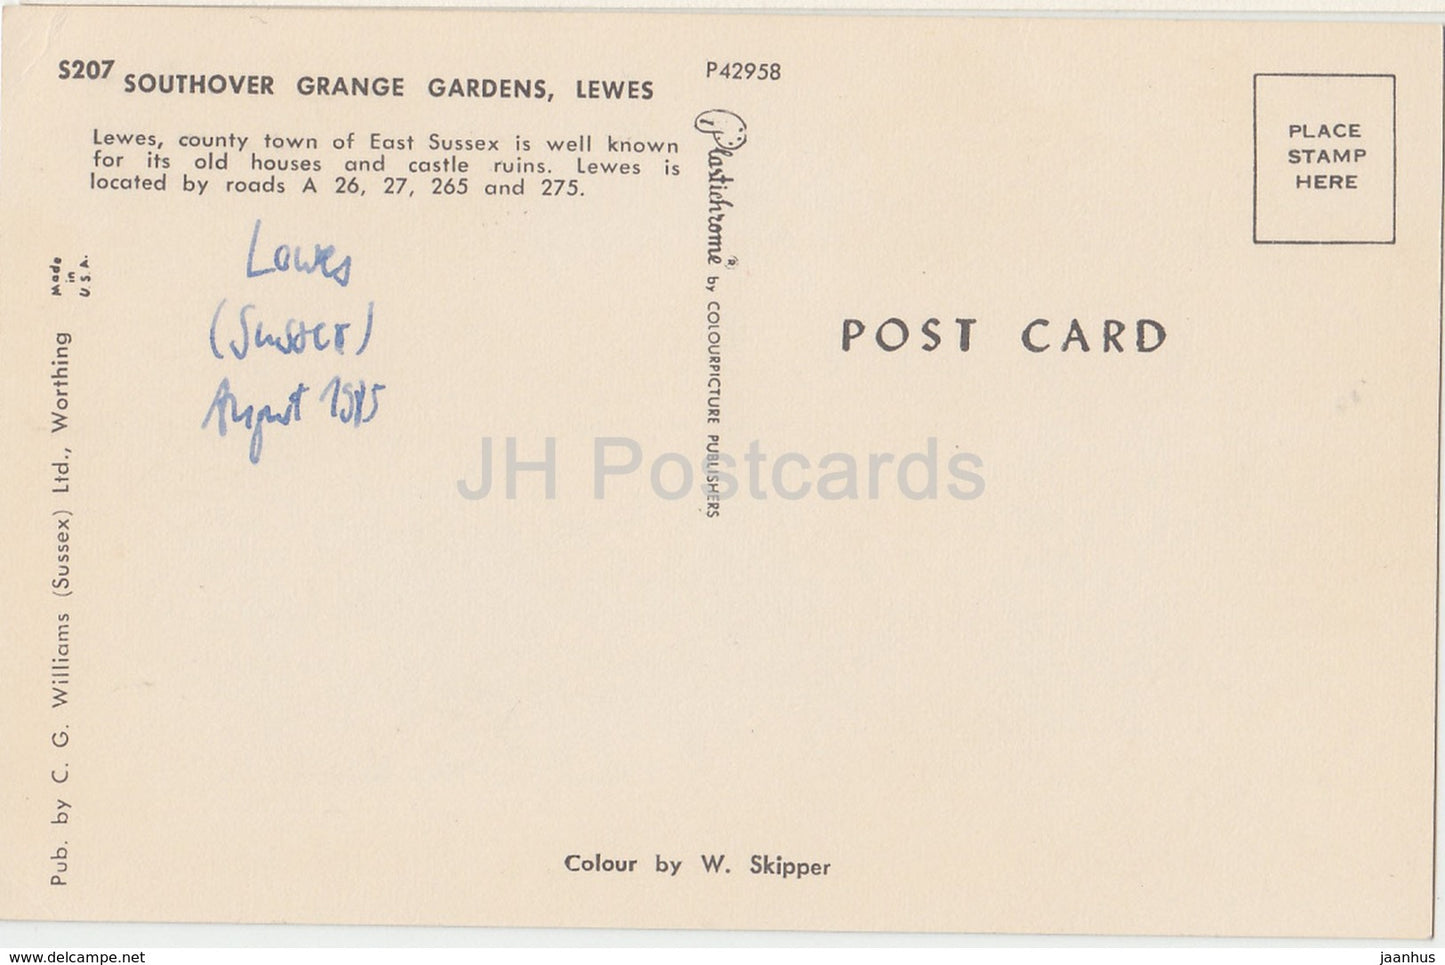 Lewes - Southover Grange Gardens - P42958 - 1985 - Royaume-Uni - Angleterre - occasion